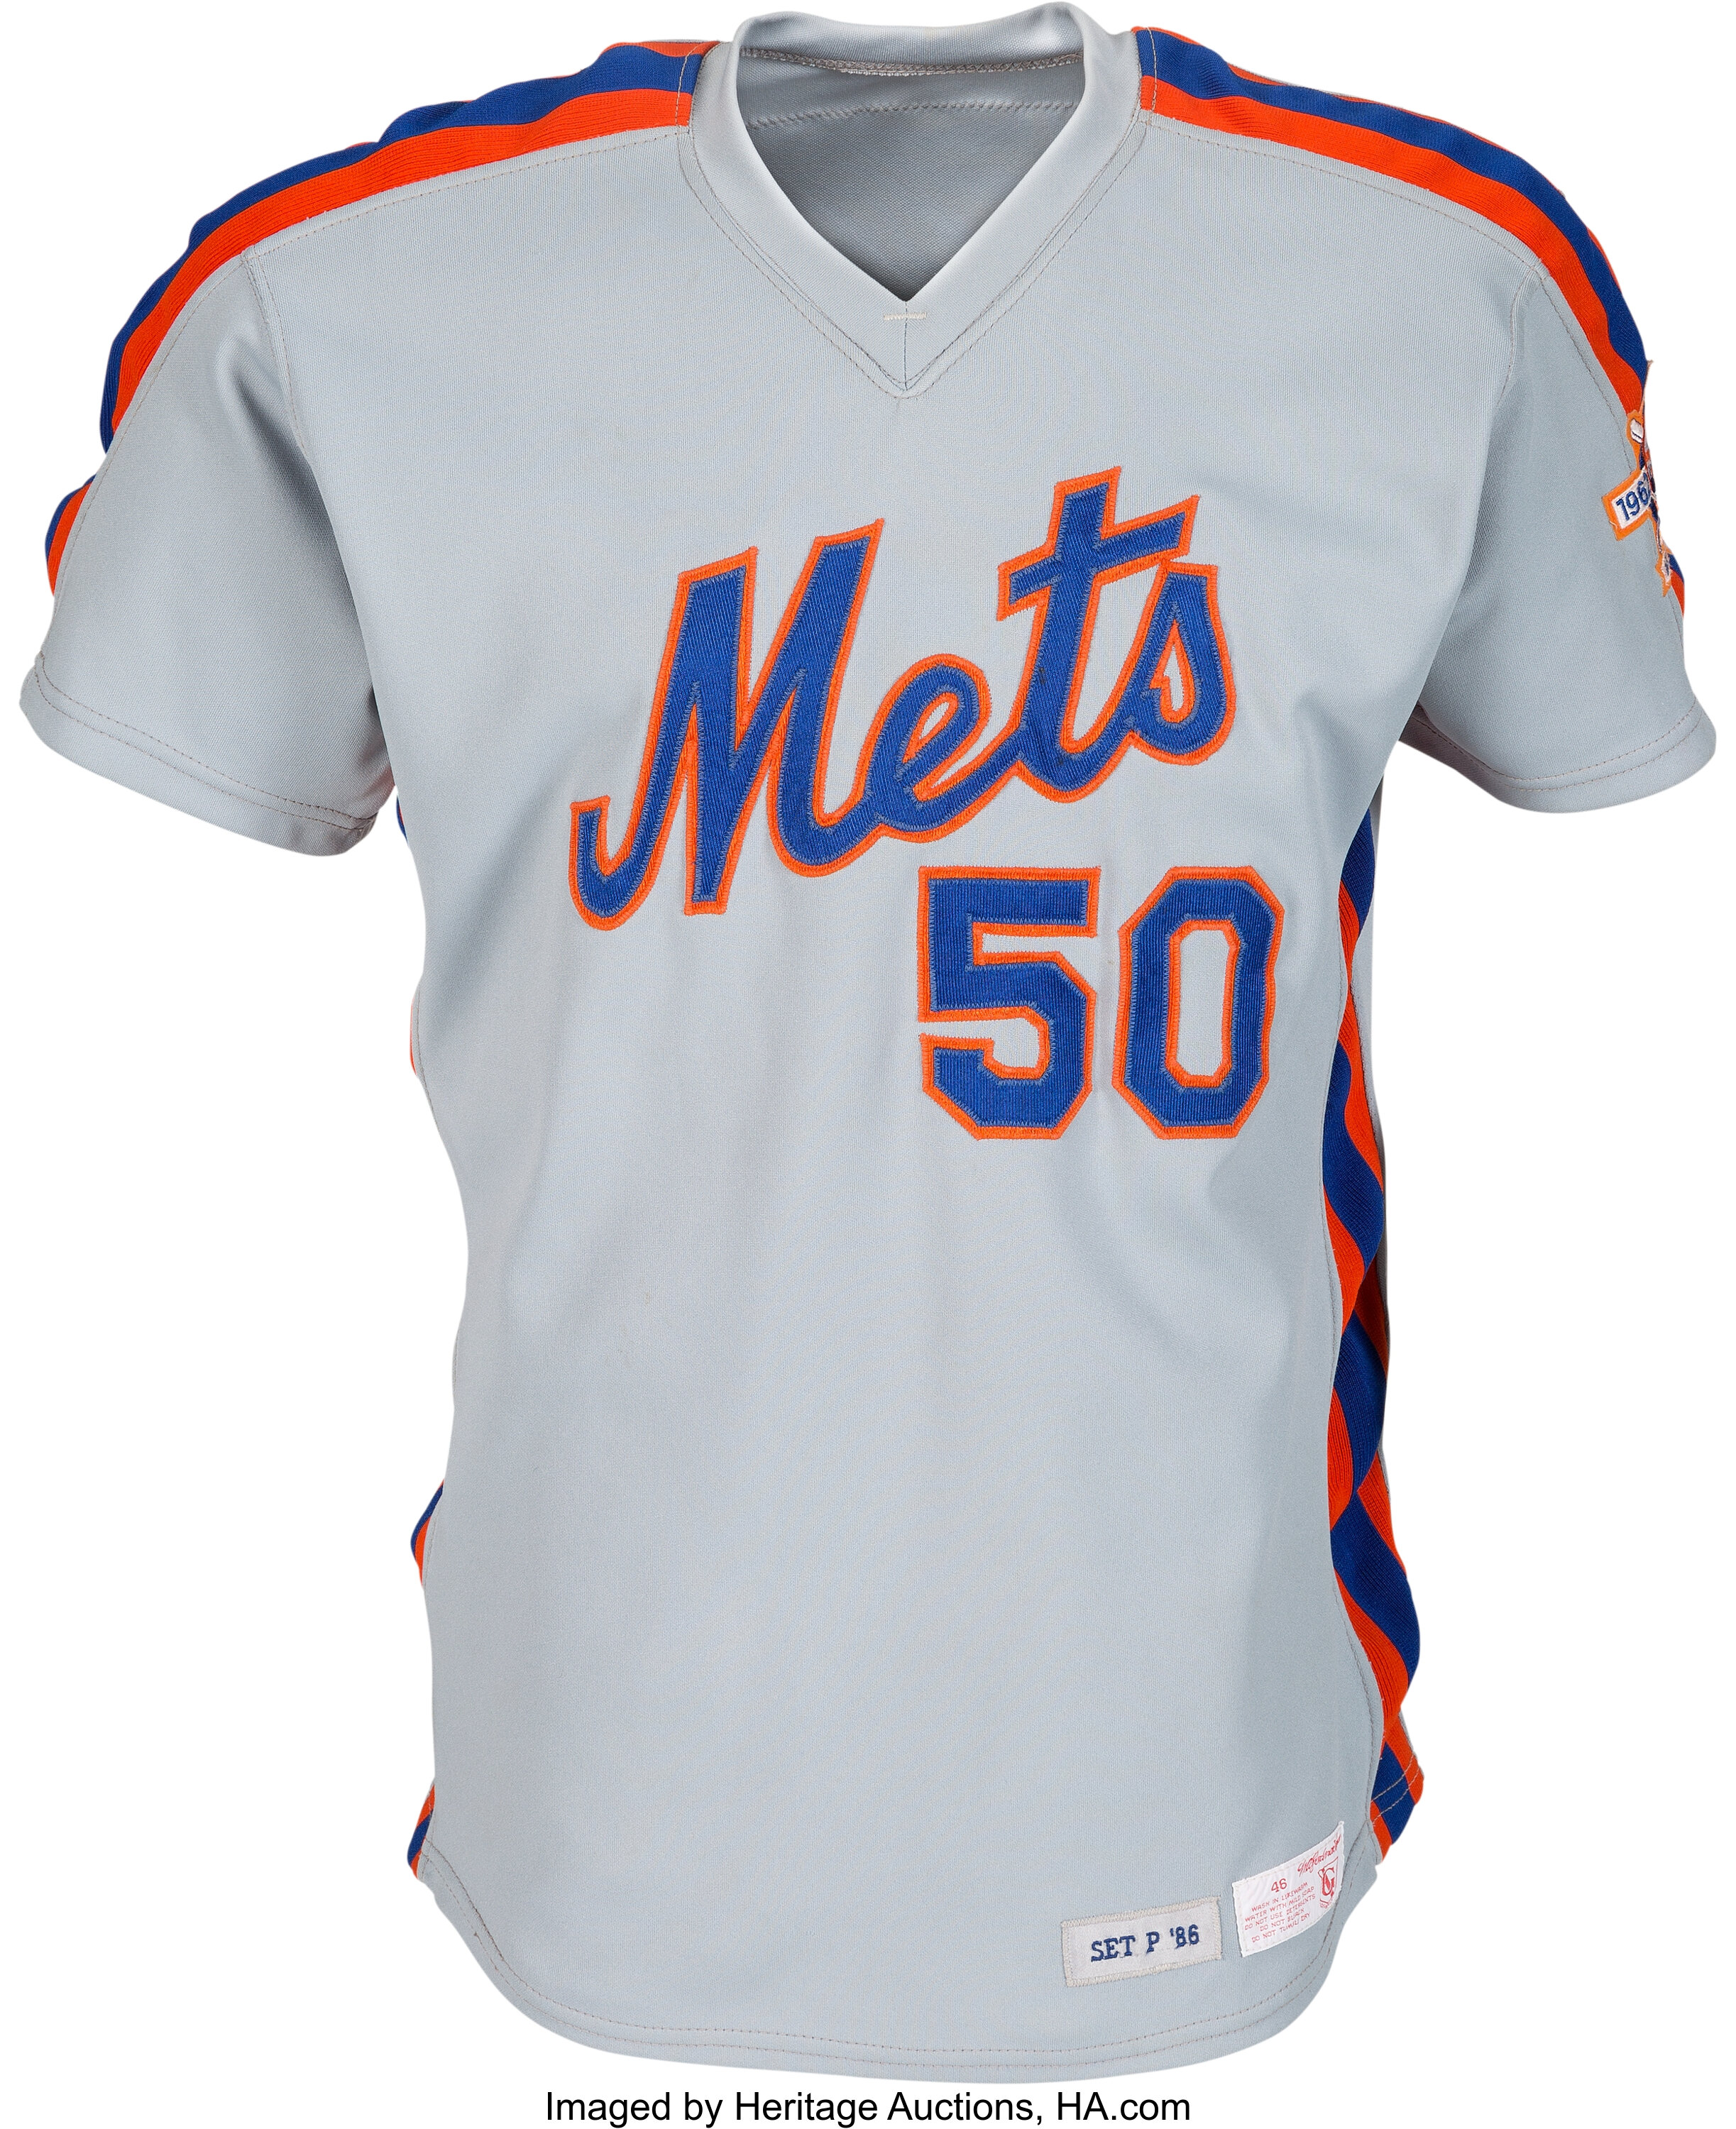 Mets to use 1986 uniforms as an alternate jersey in 2016 - Amazin' Avenue